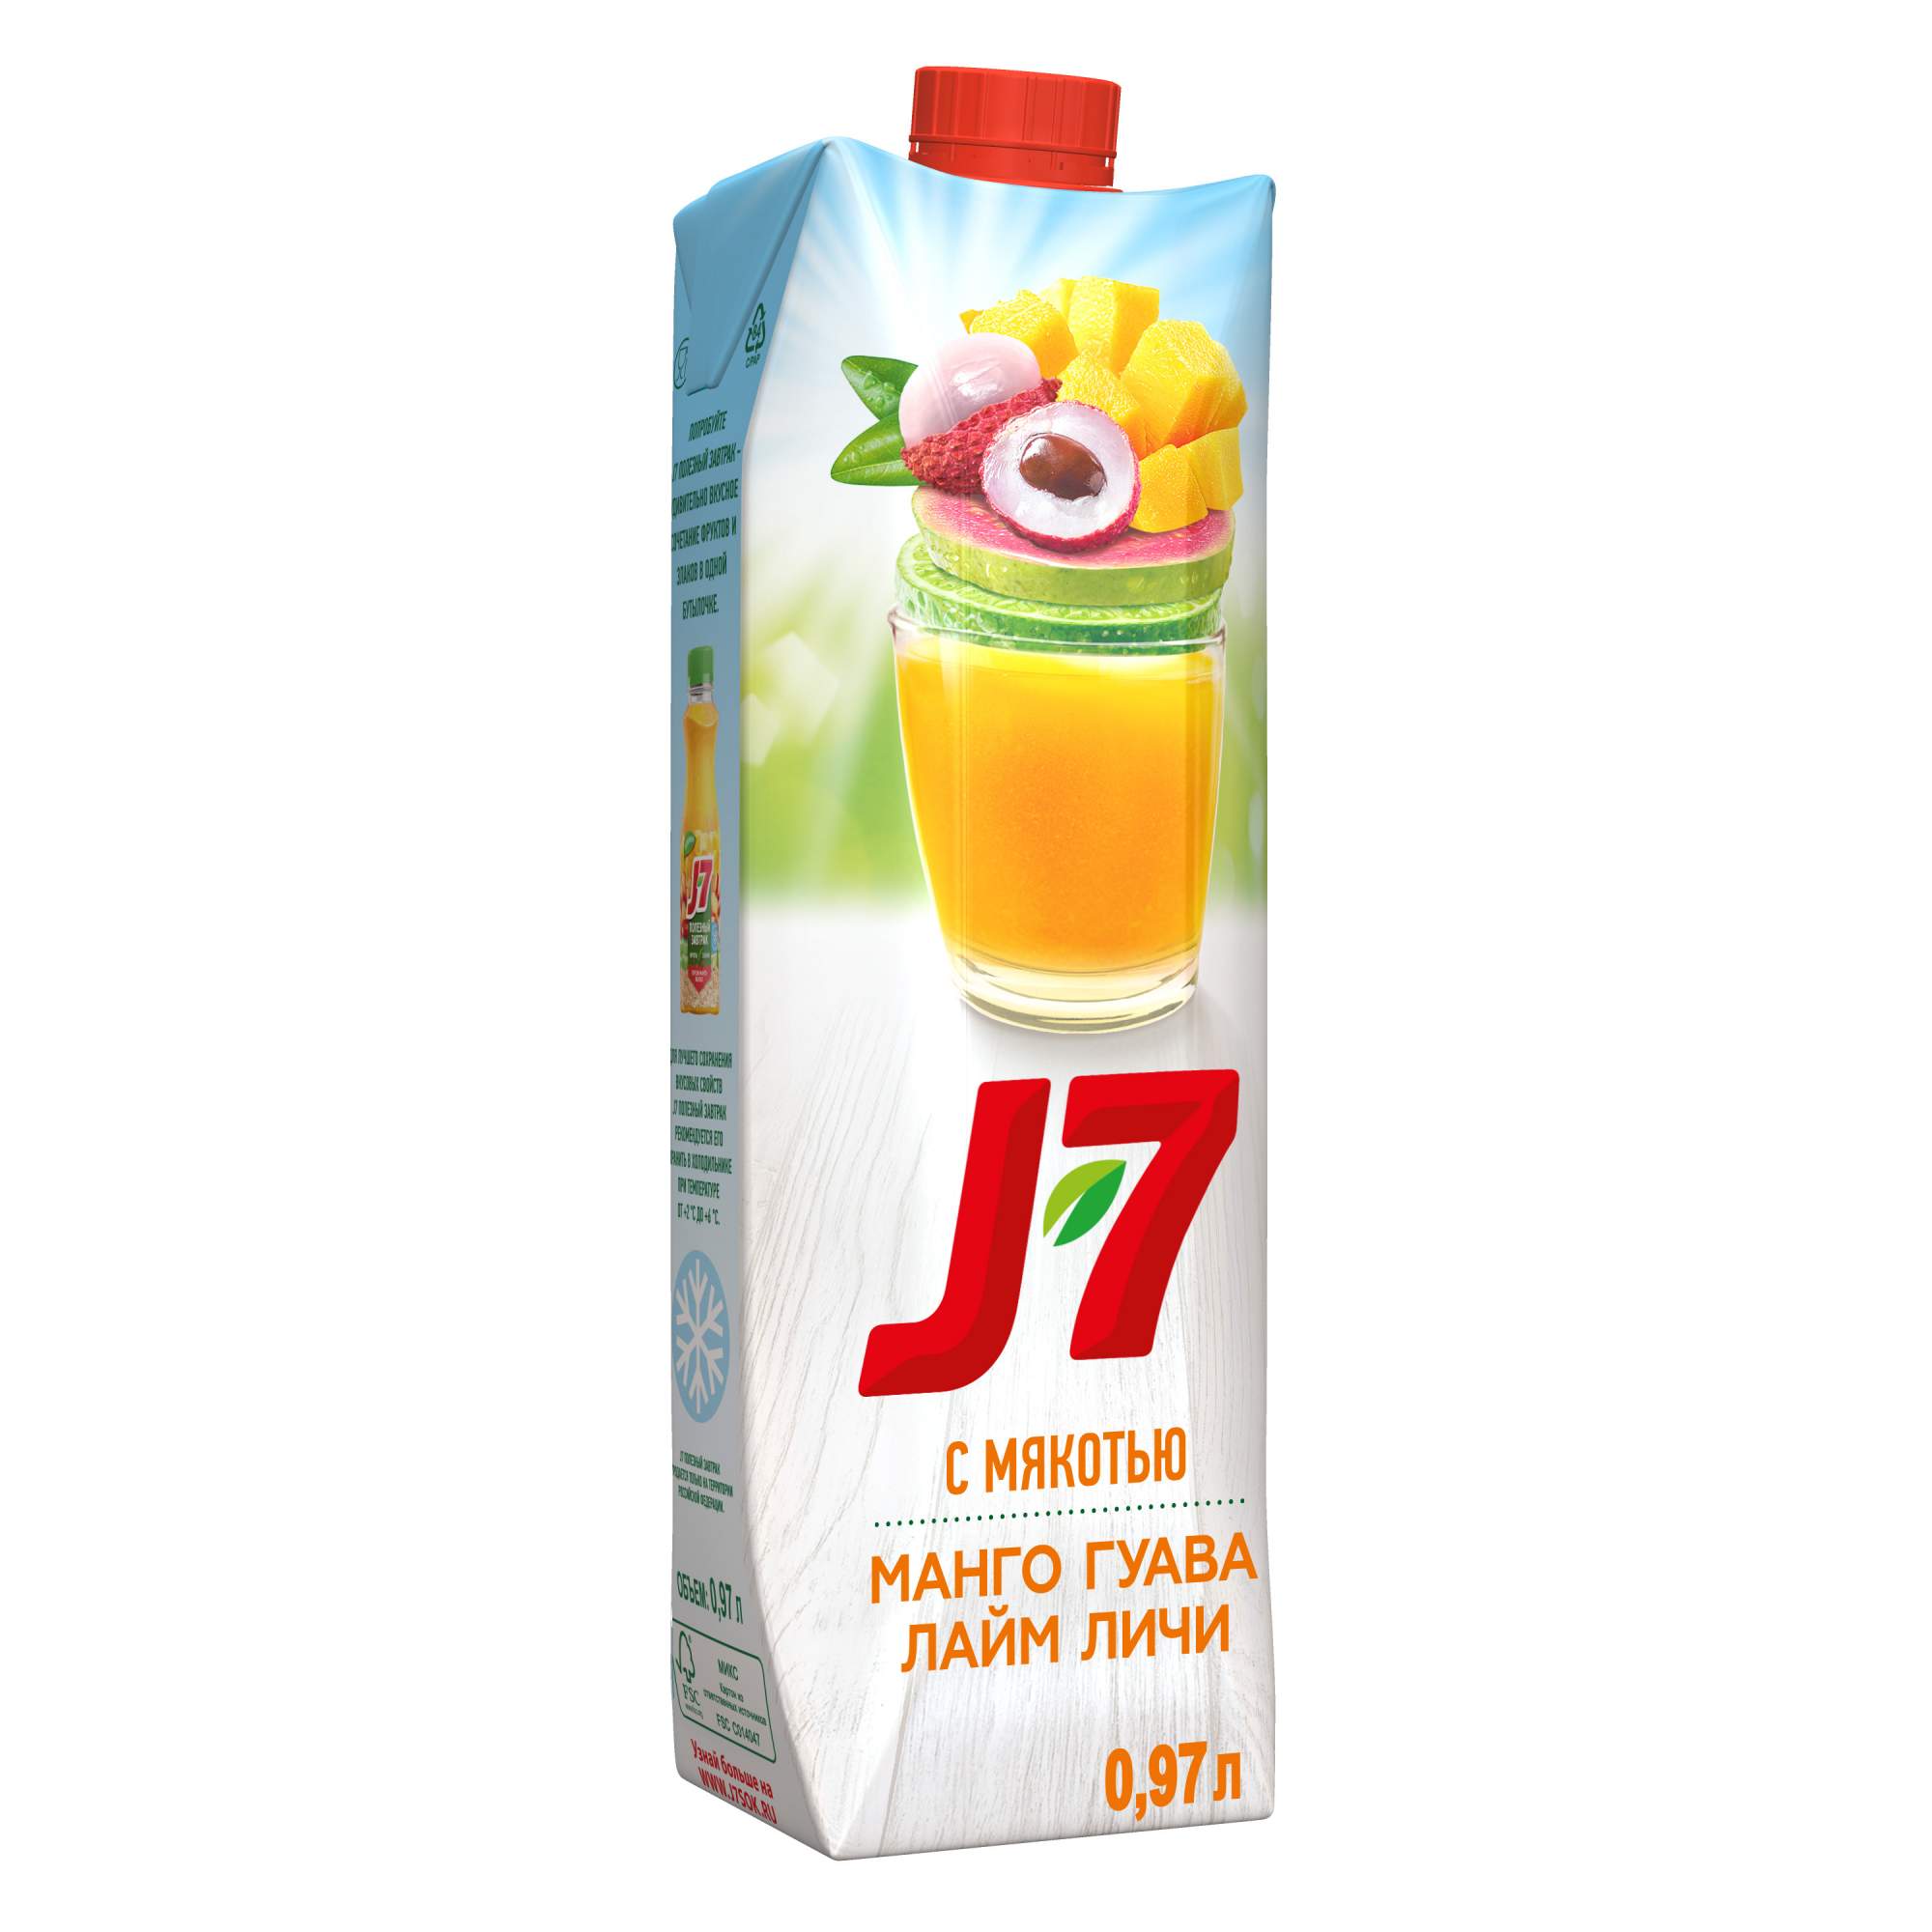 Напиток  J7  сокосодержащий лайм-личи-манго-гуава 0.97 л